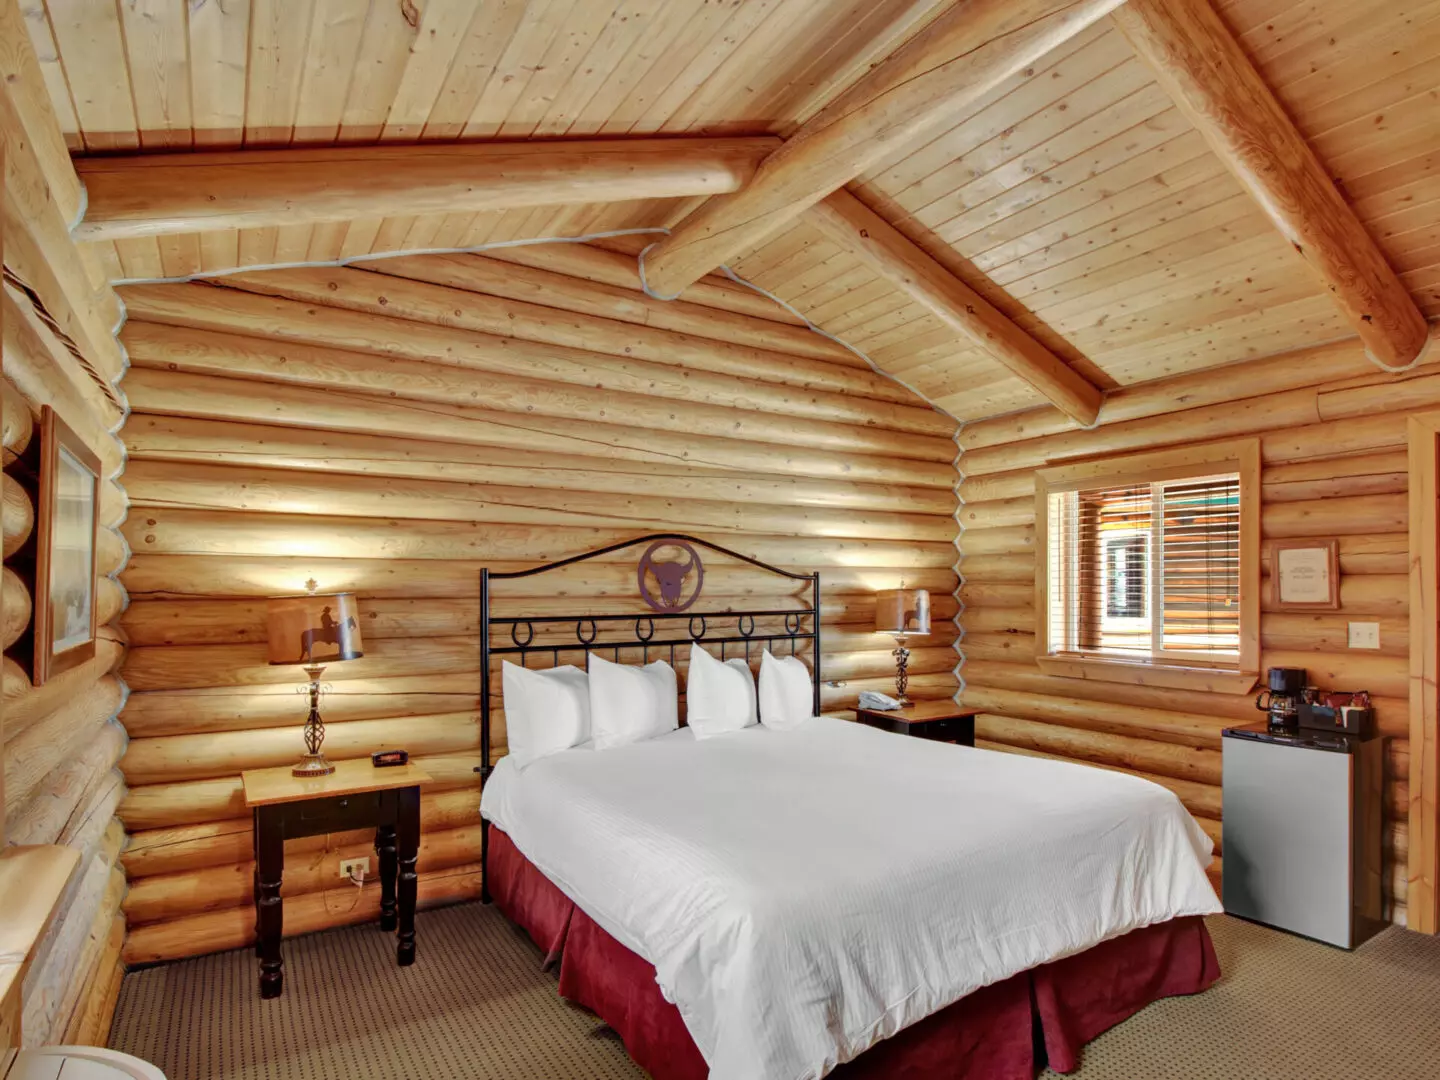 A Log Cabin Bedroom